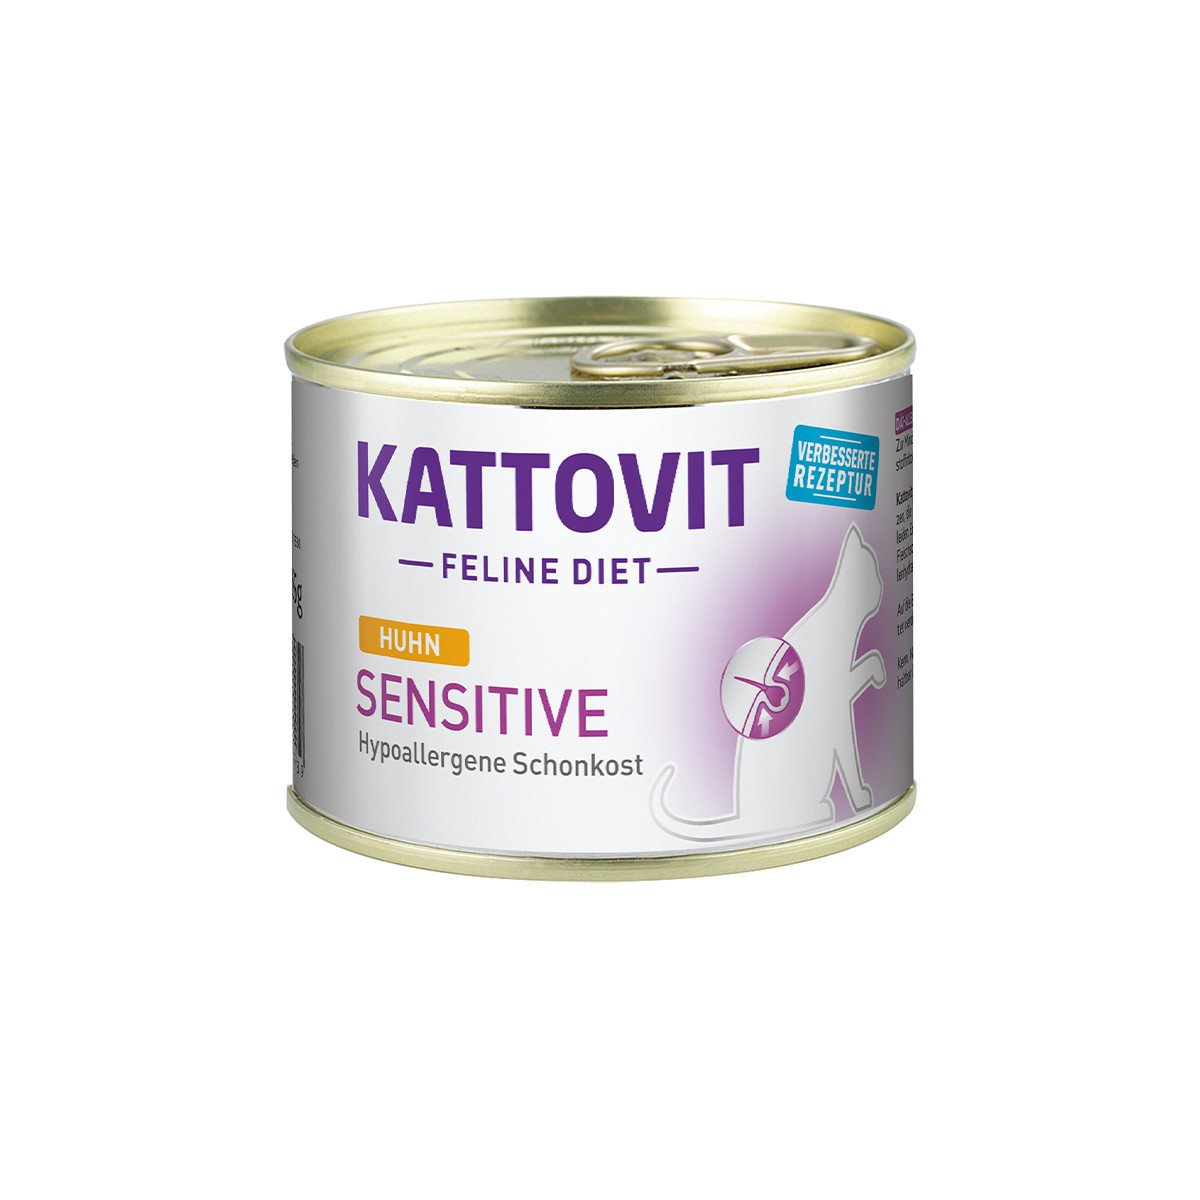 Kattovit Feline Diet Sensitive, Kuře 12 × 185 g